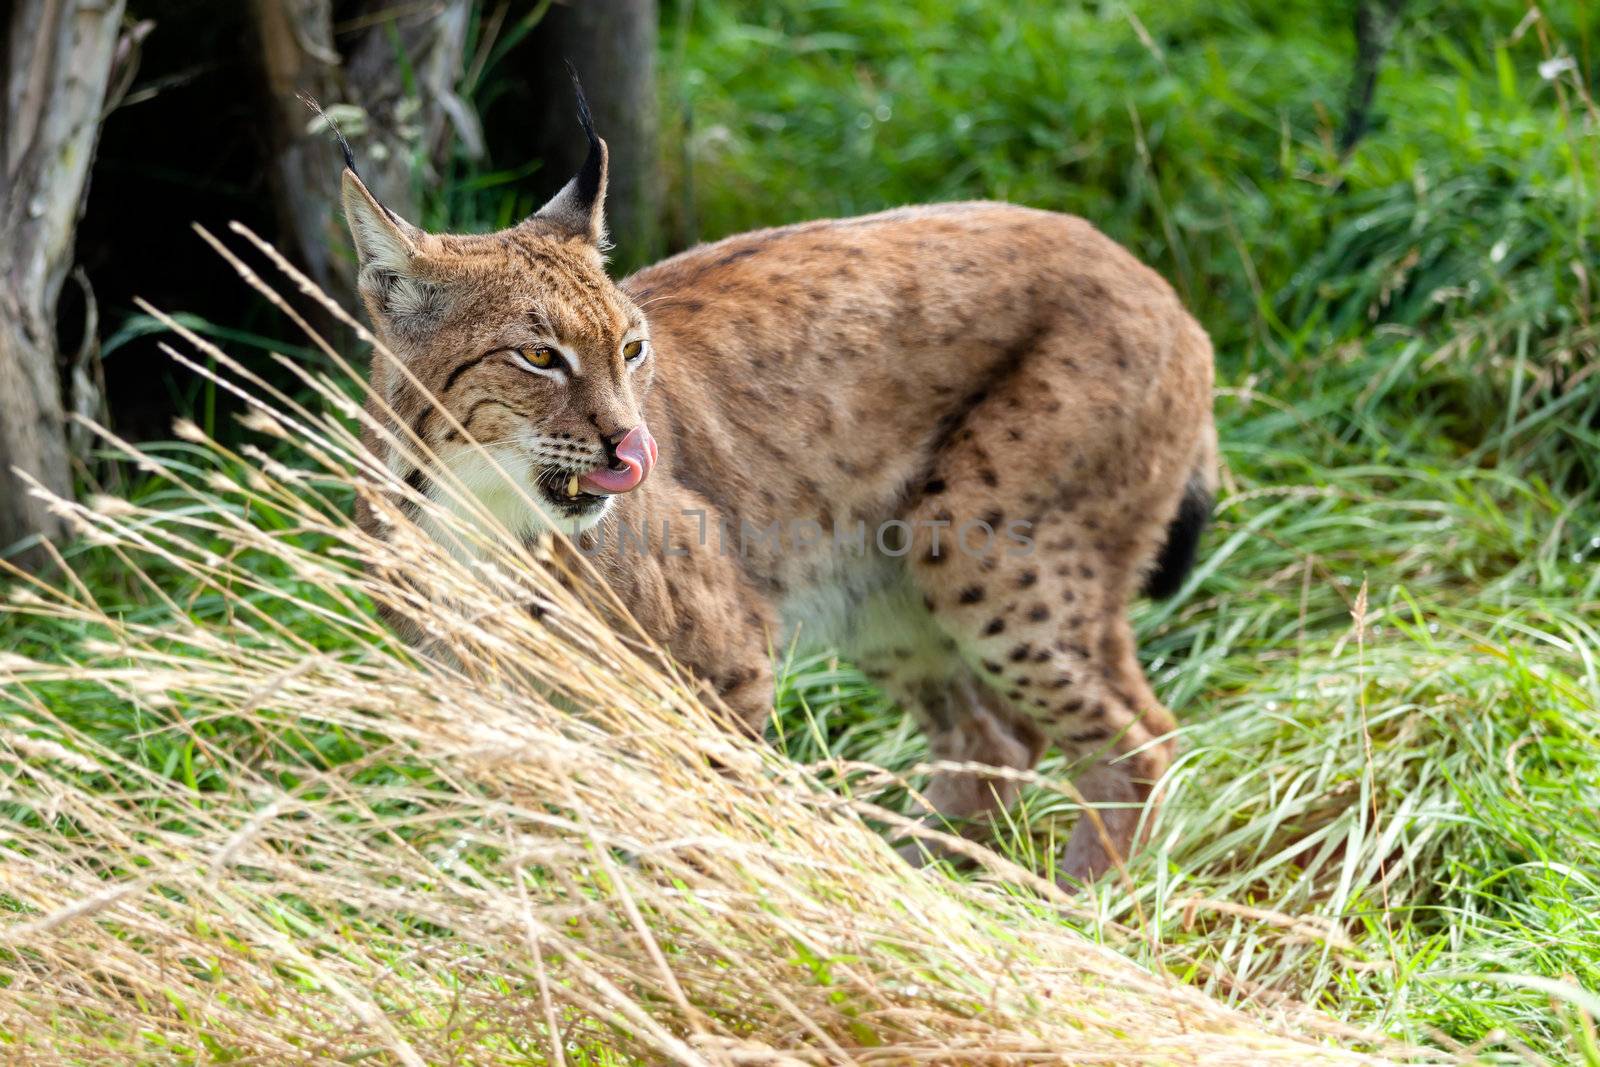 Eurasian Lynx Standing in Long Grass Licking Nose